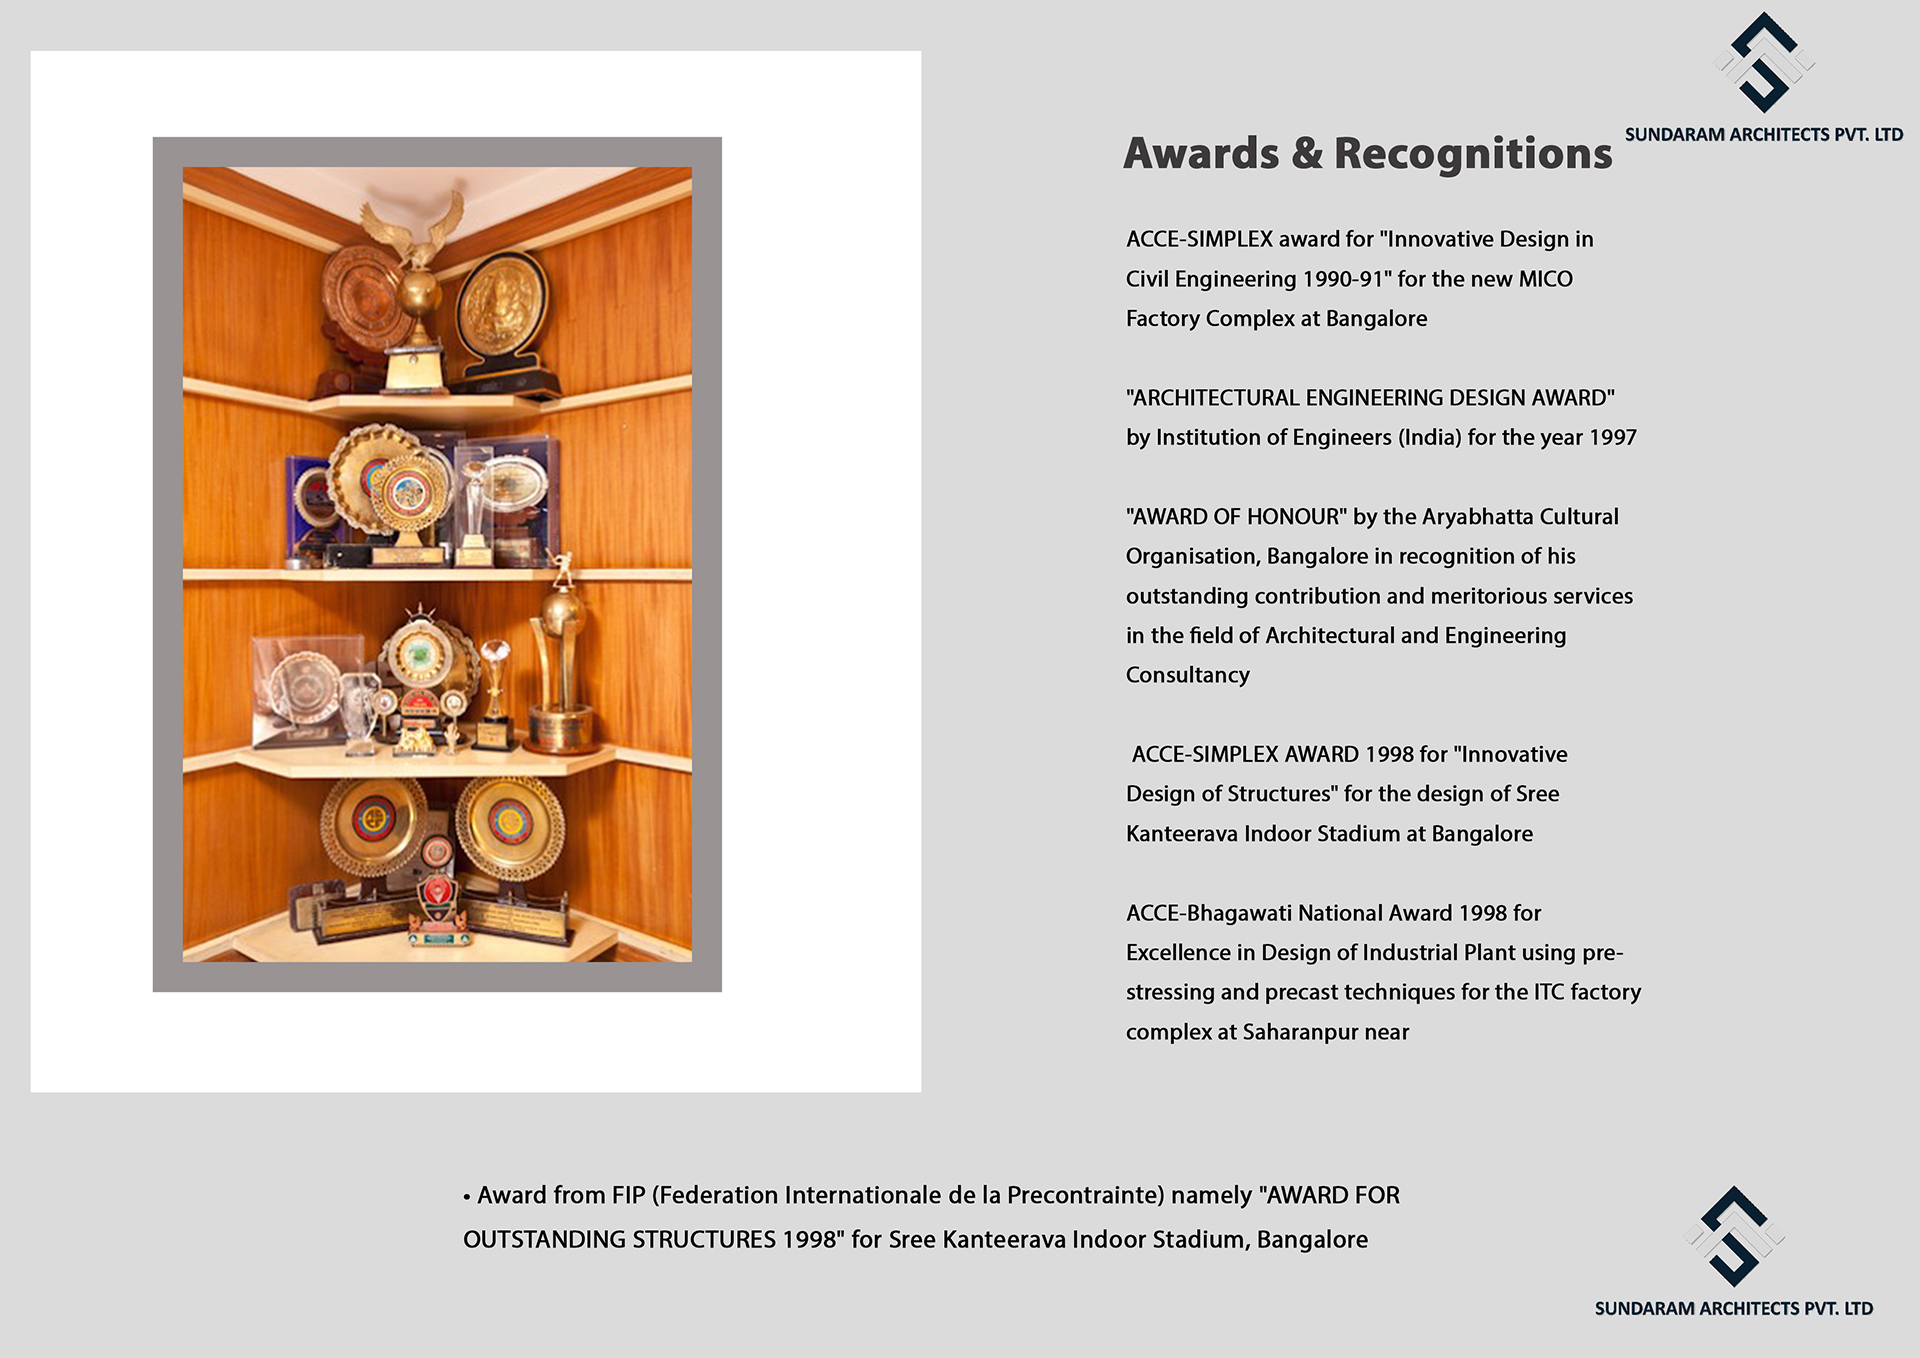 Awards & Recognitions of Sundaram Architects